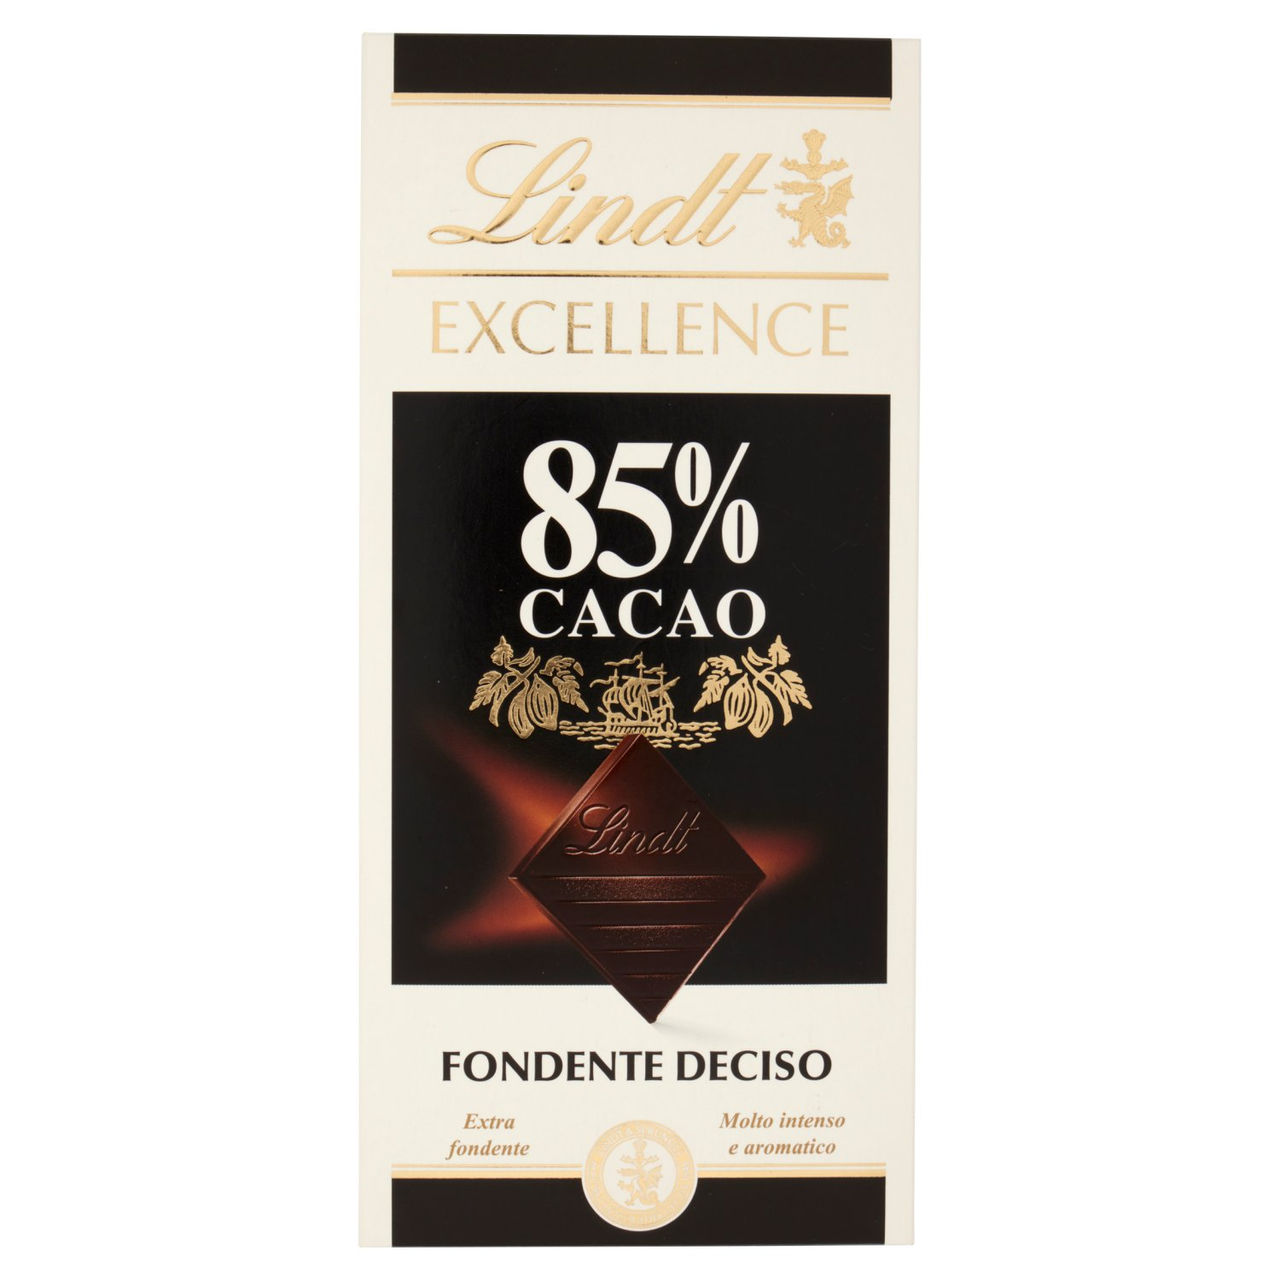 Lindt Excellence 85% Cacao Fondente Deciso 100 g